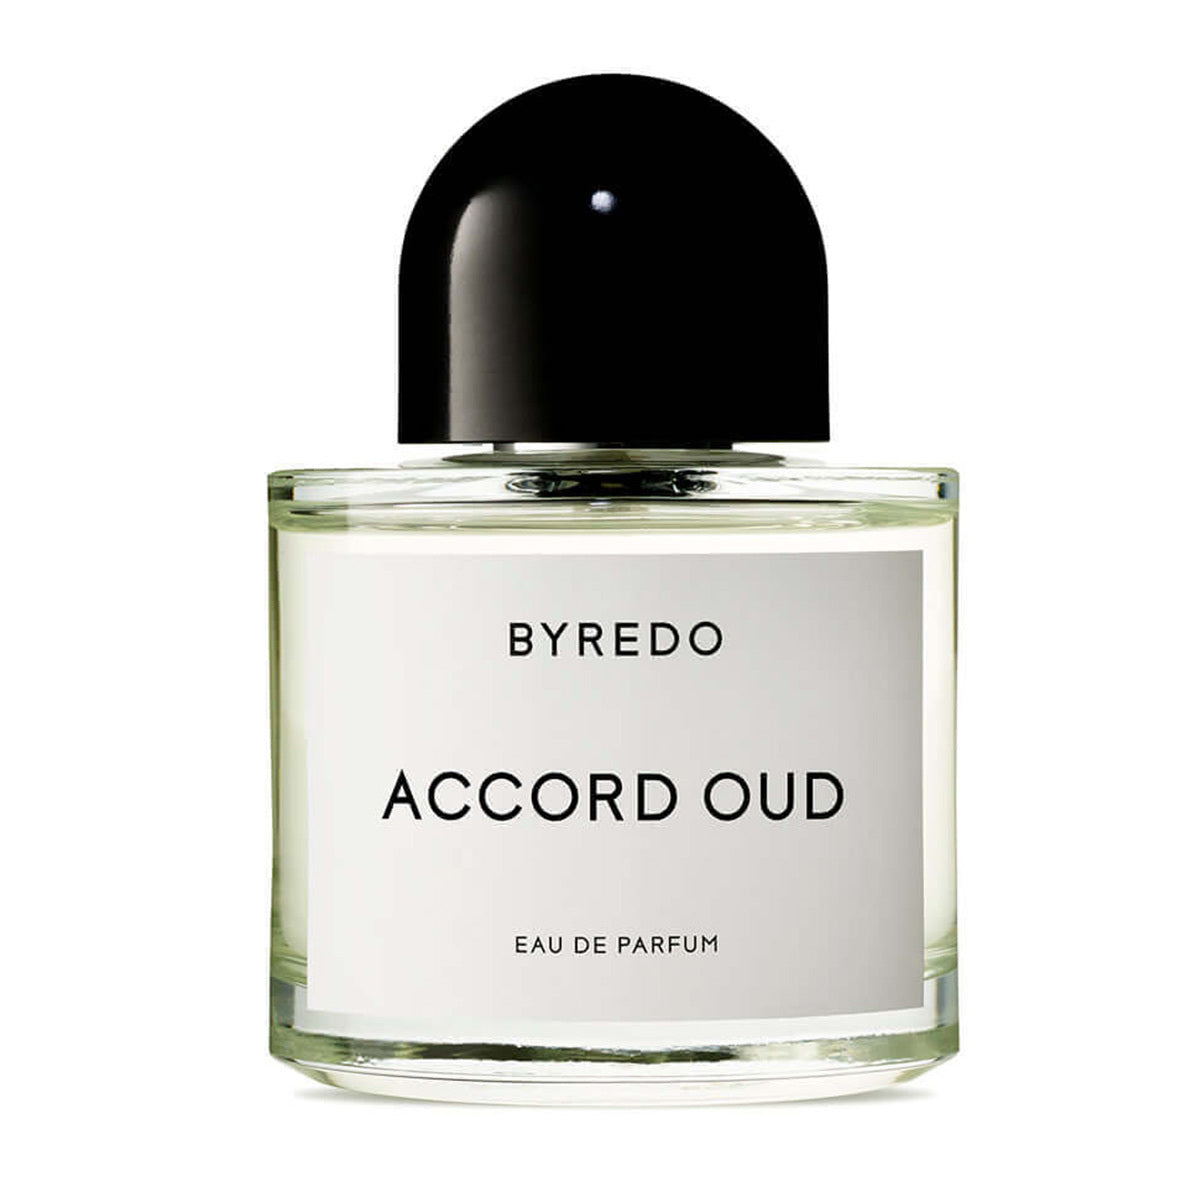 Primary image of Accord Oud Eau de Parfum